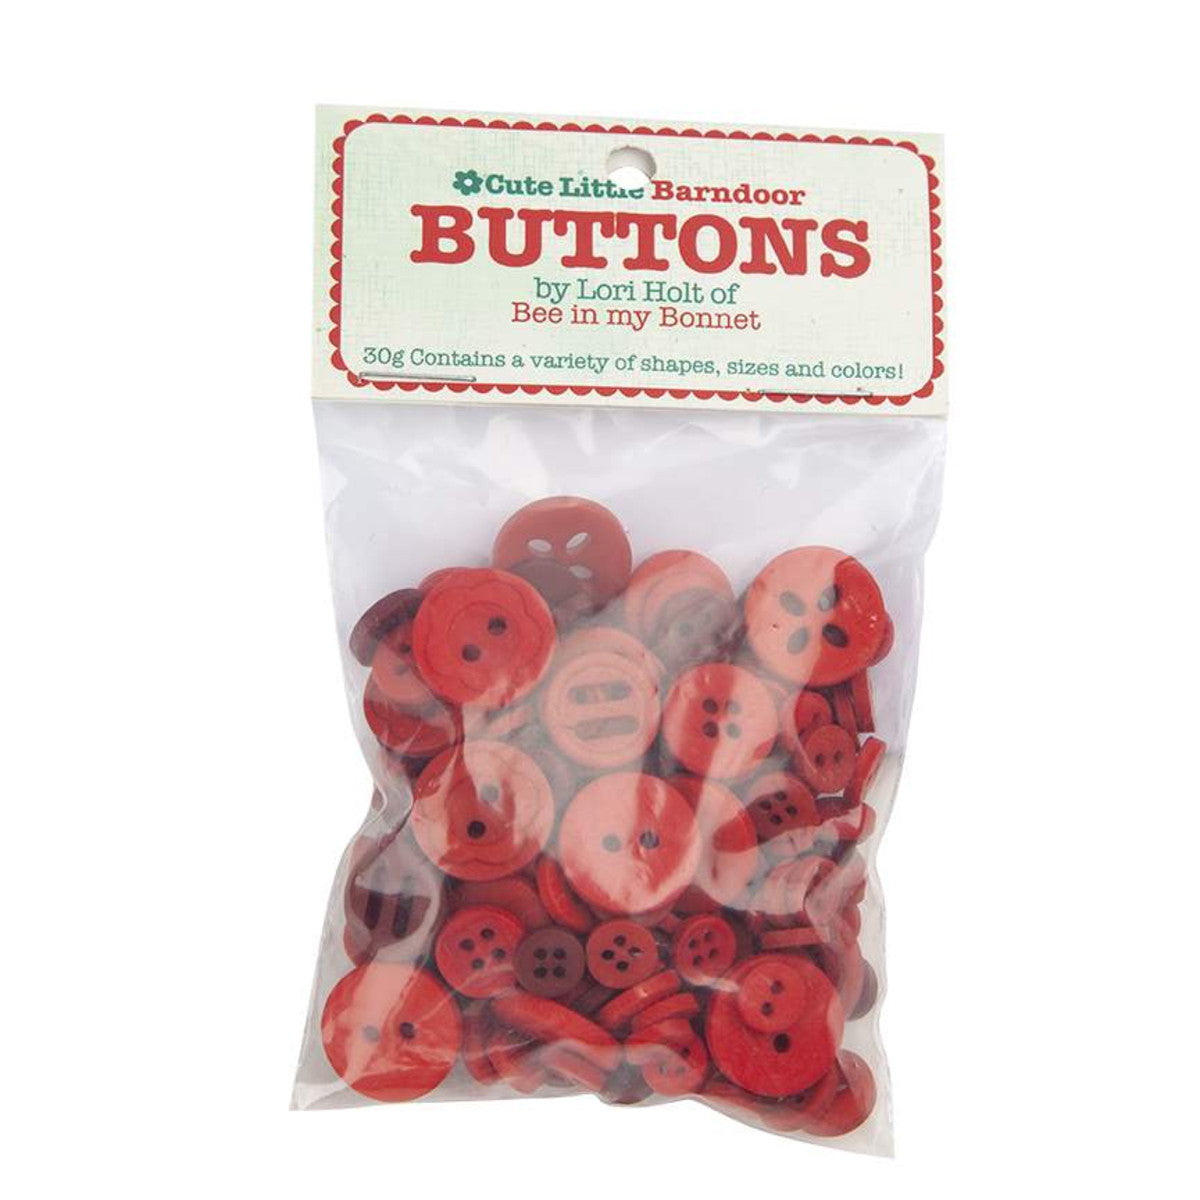 Buttons, Barndoor Cute Little Button Packet by Lori Holt